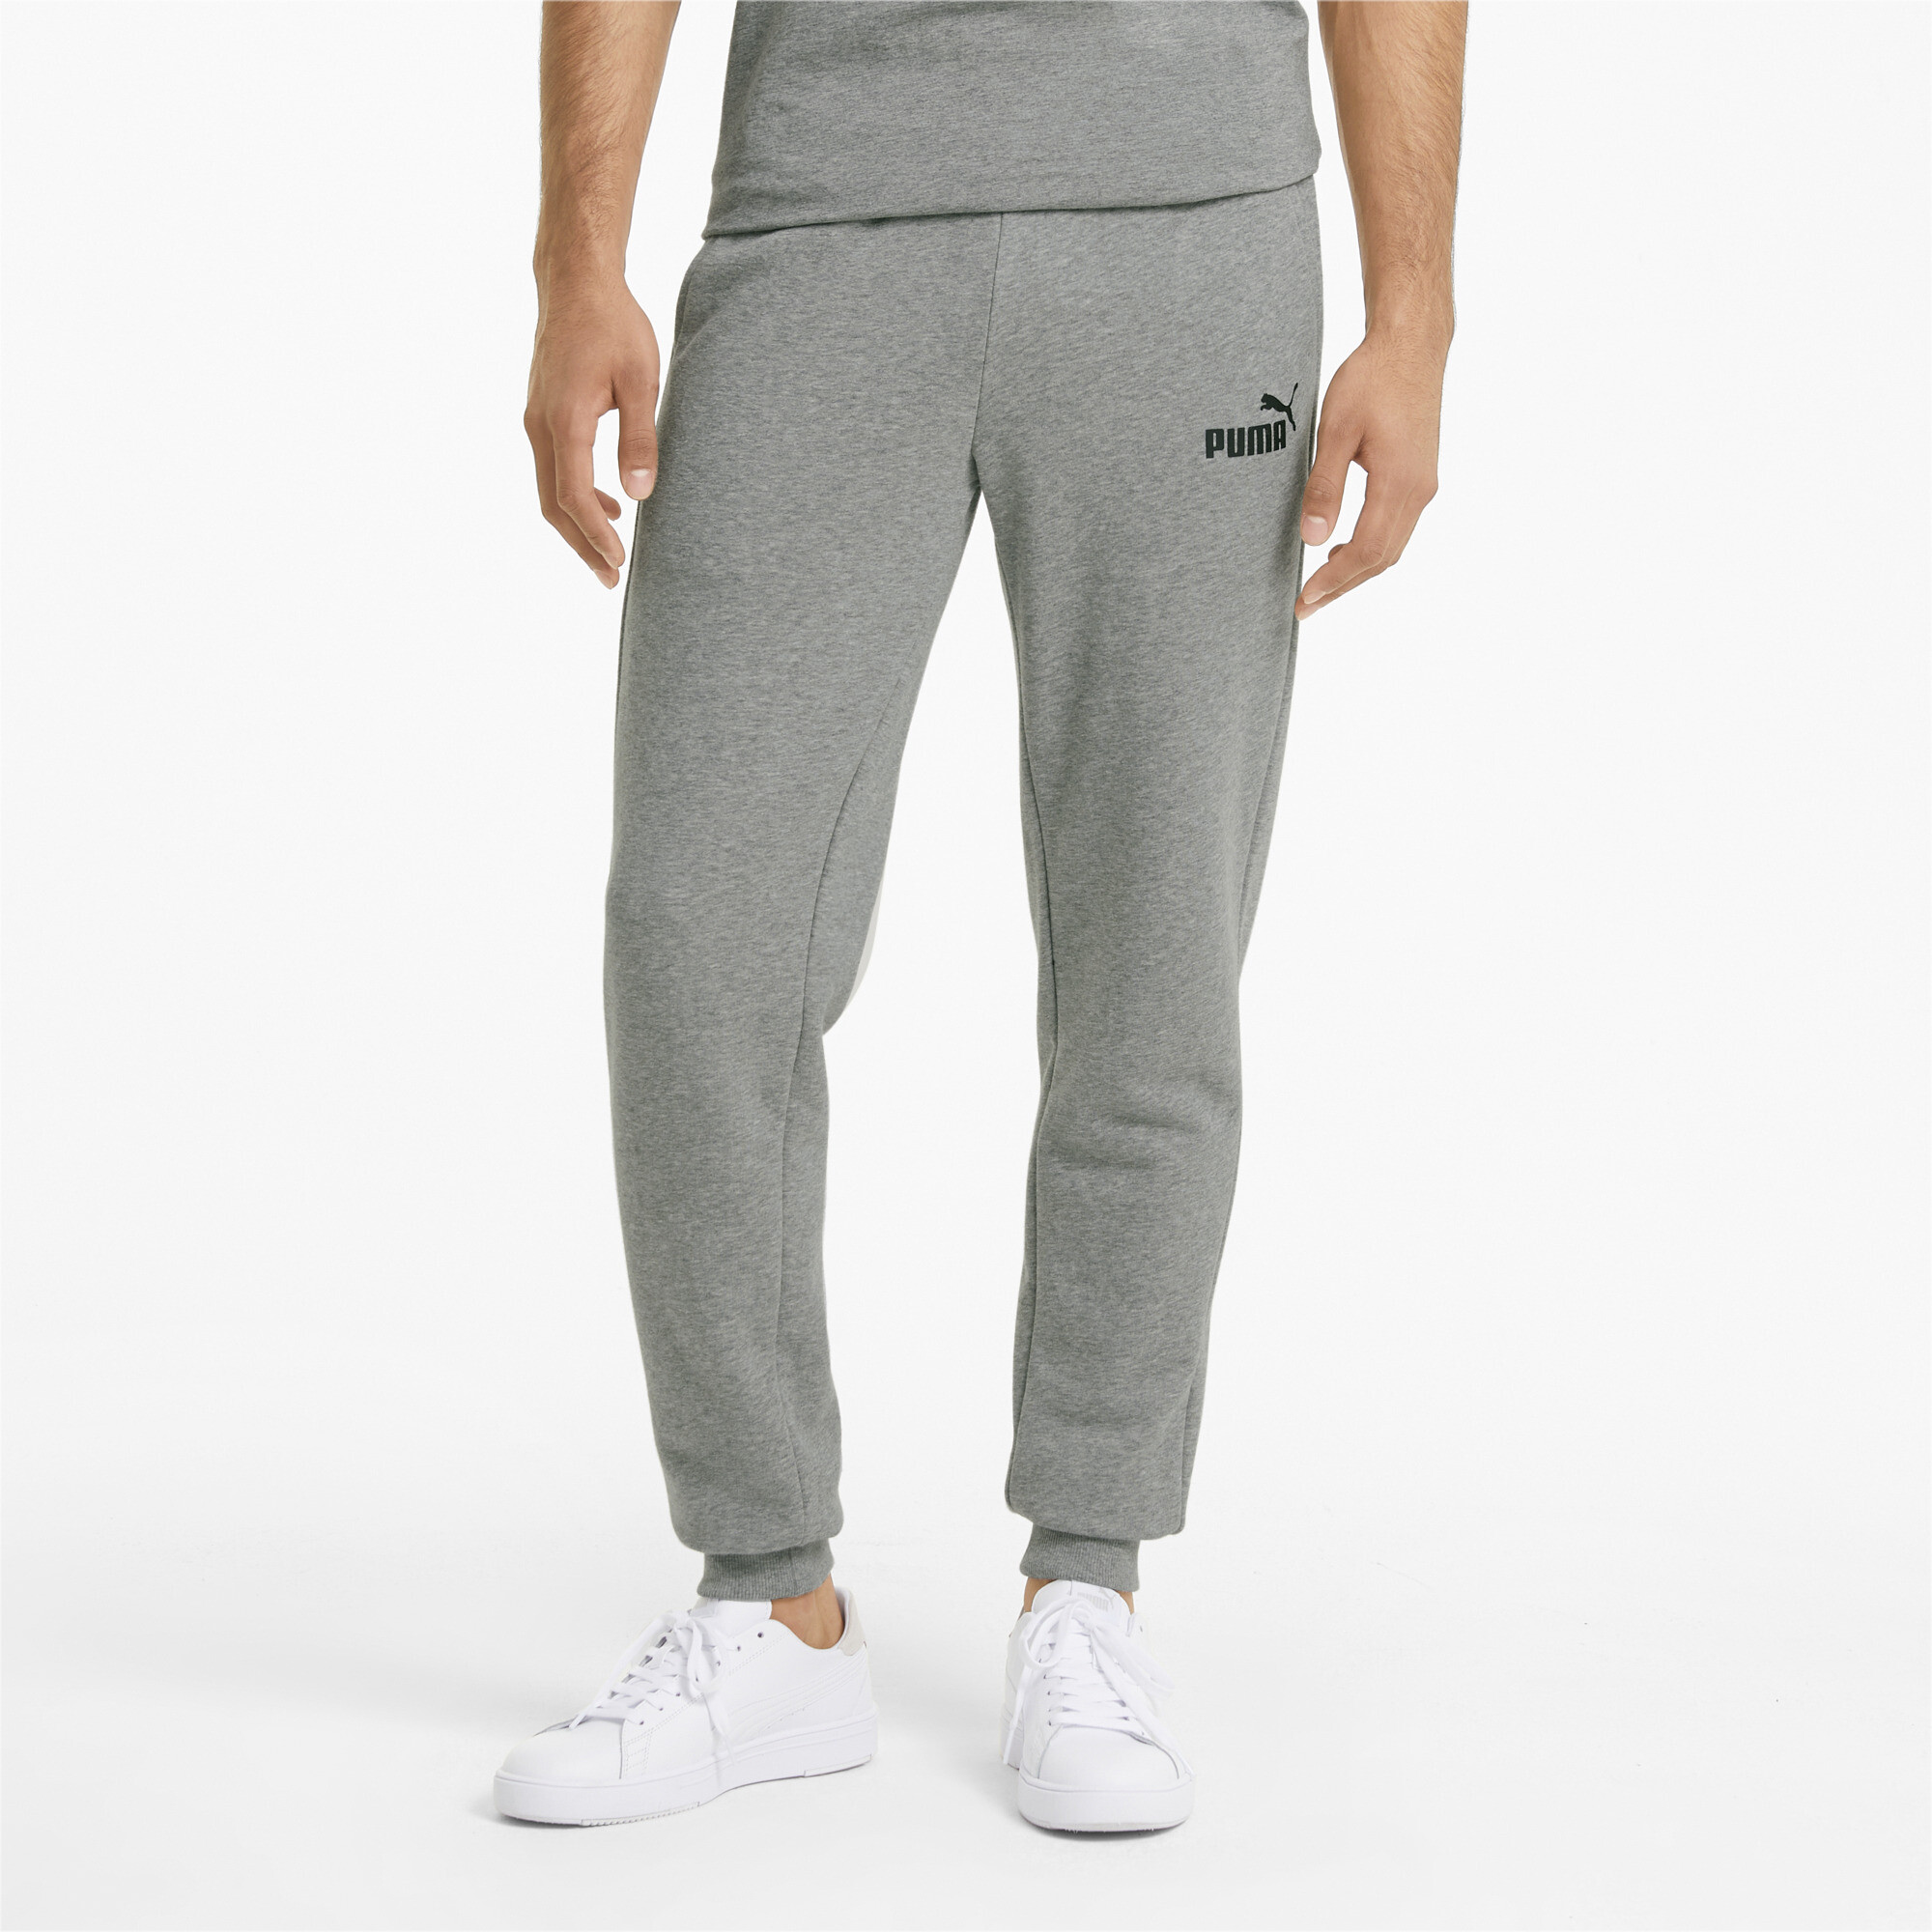 Men's Puma Essentials Slim's Pants, Gray, Size XS, Clothing